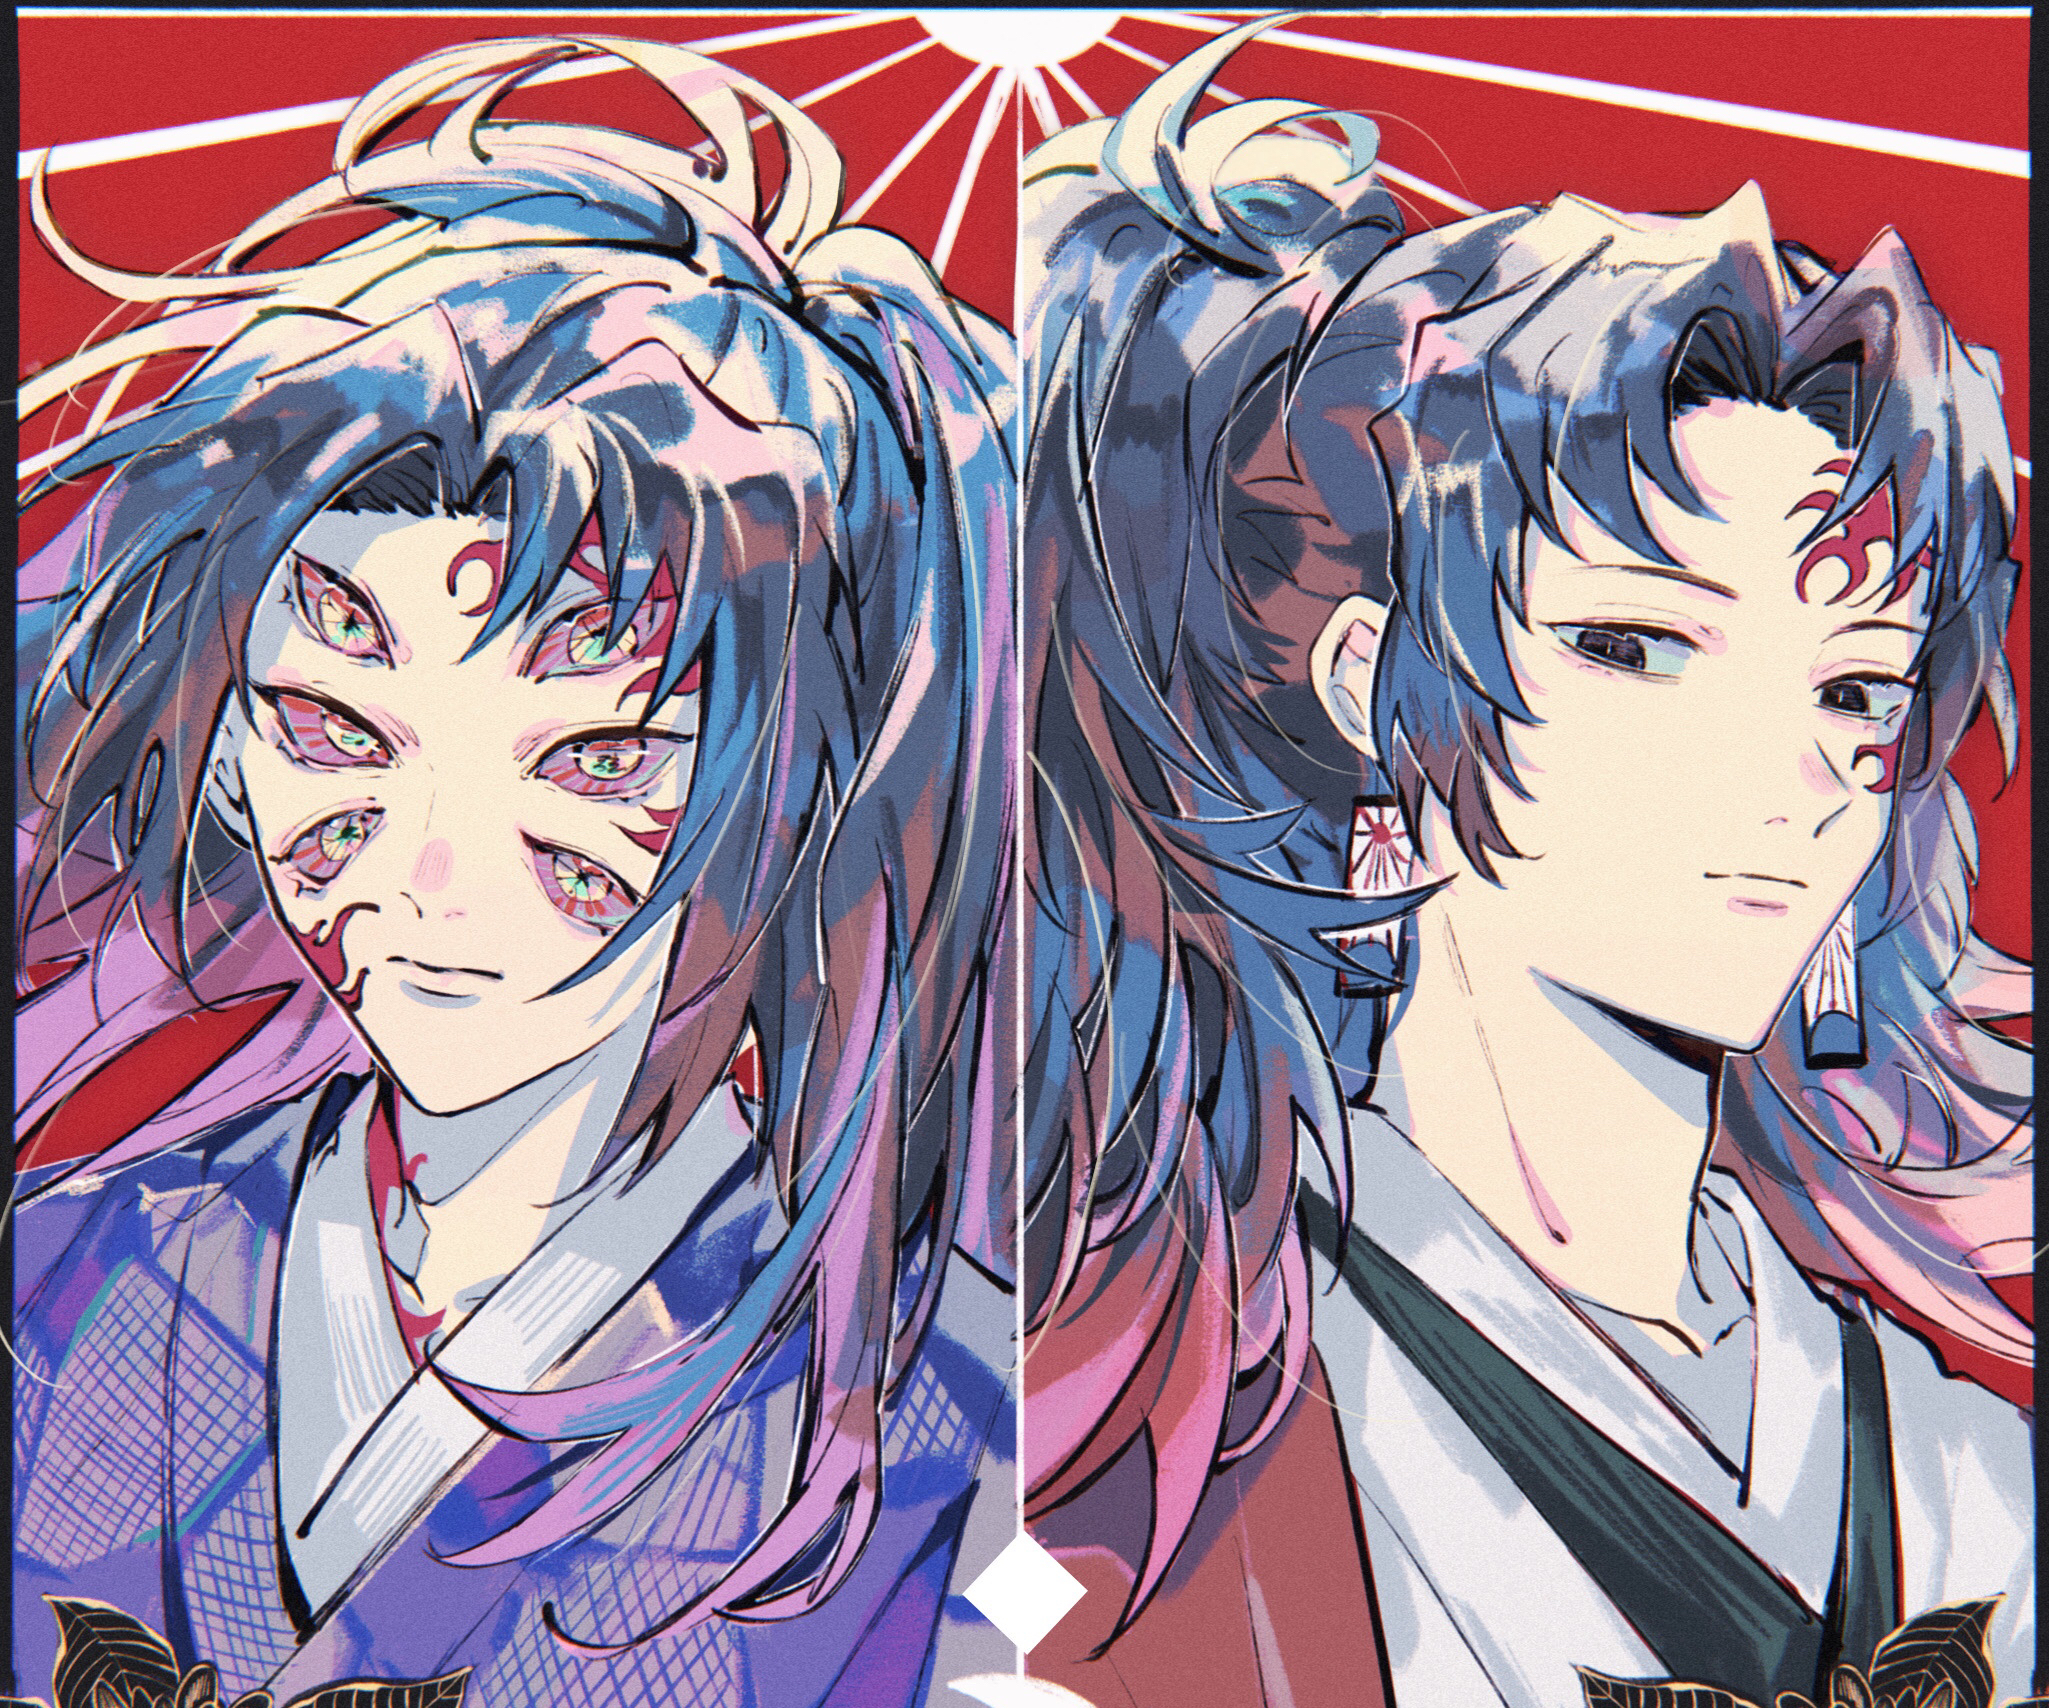 1047607 descargar imagen yoriichi tsugikuni, demon slayer: kimetsu no yaiba, kokushibo (asesino de demonios), animado: fondos de pantalla y protectores de pantalla gratis